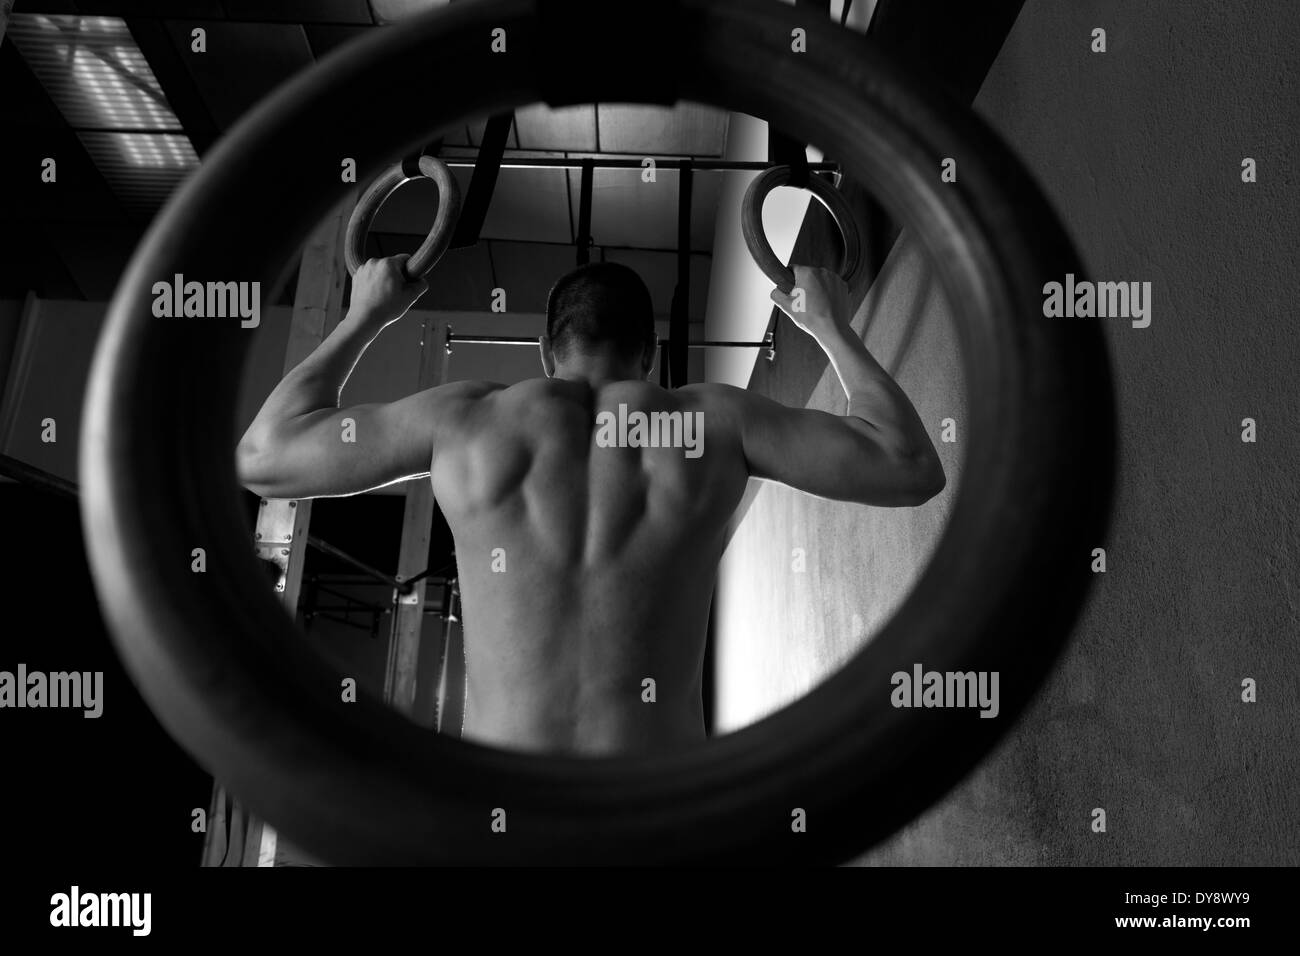 Rings workout man at gym hanging rear back view Stock Photo